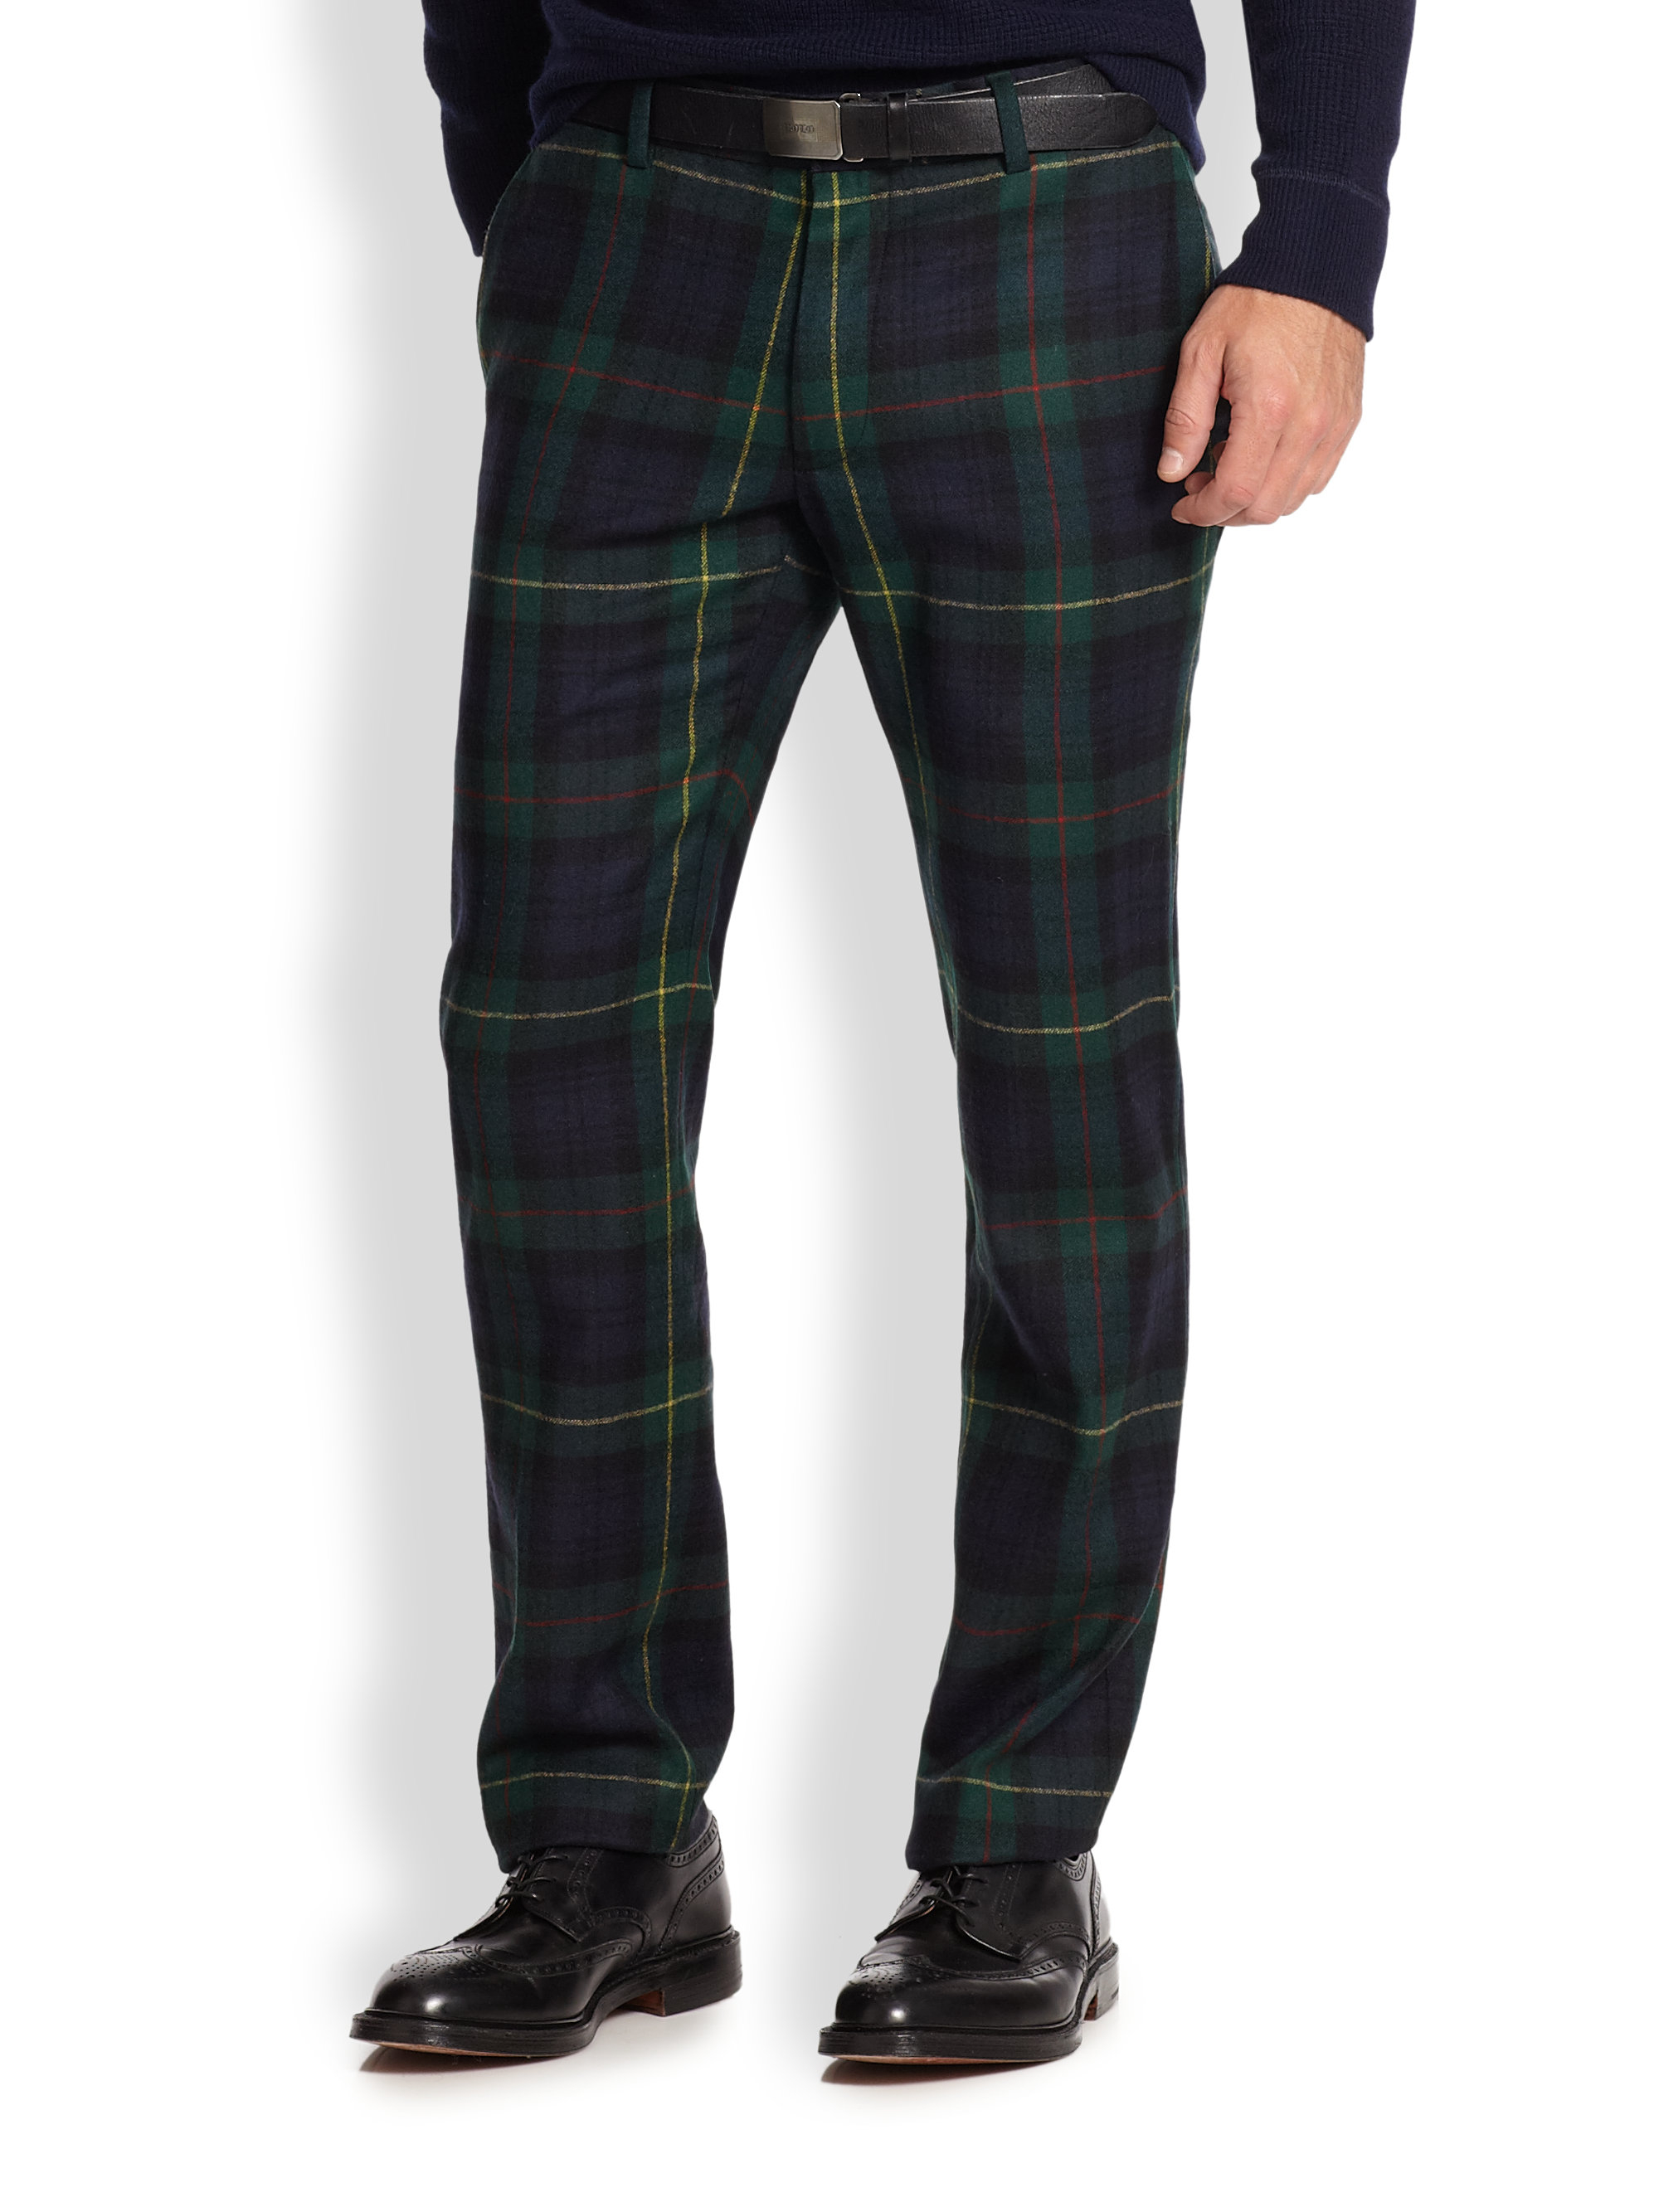 Polo Ralph Lauren Slim-fit Tartan Newport Pants for Men - Lyst